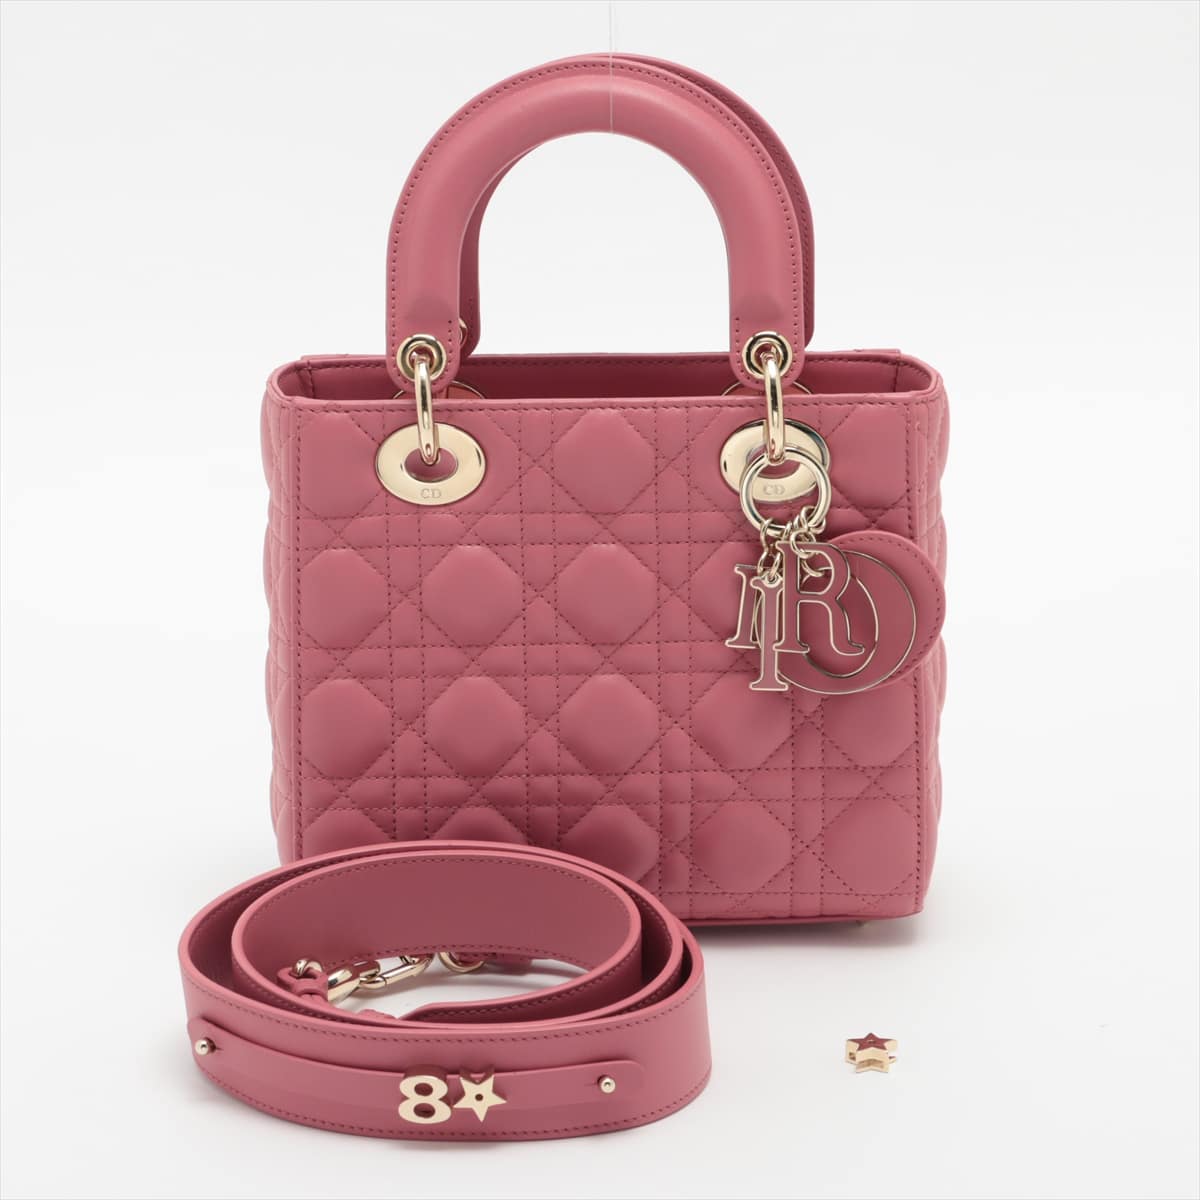 Diorクリスチャンディオールレディカナージュレザーチェーンショルダーバッグ鞄